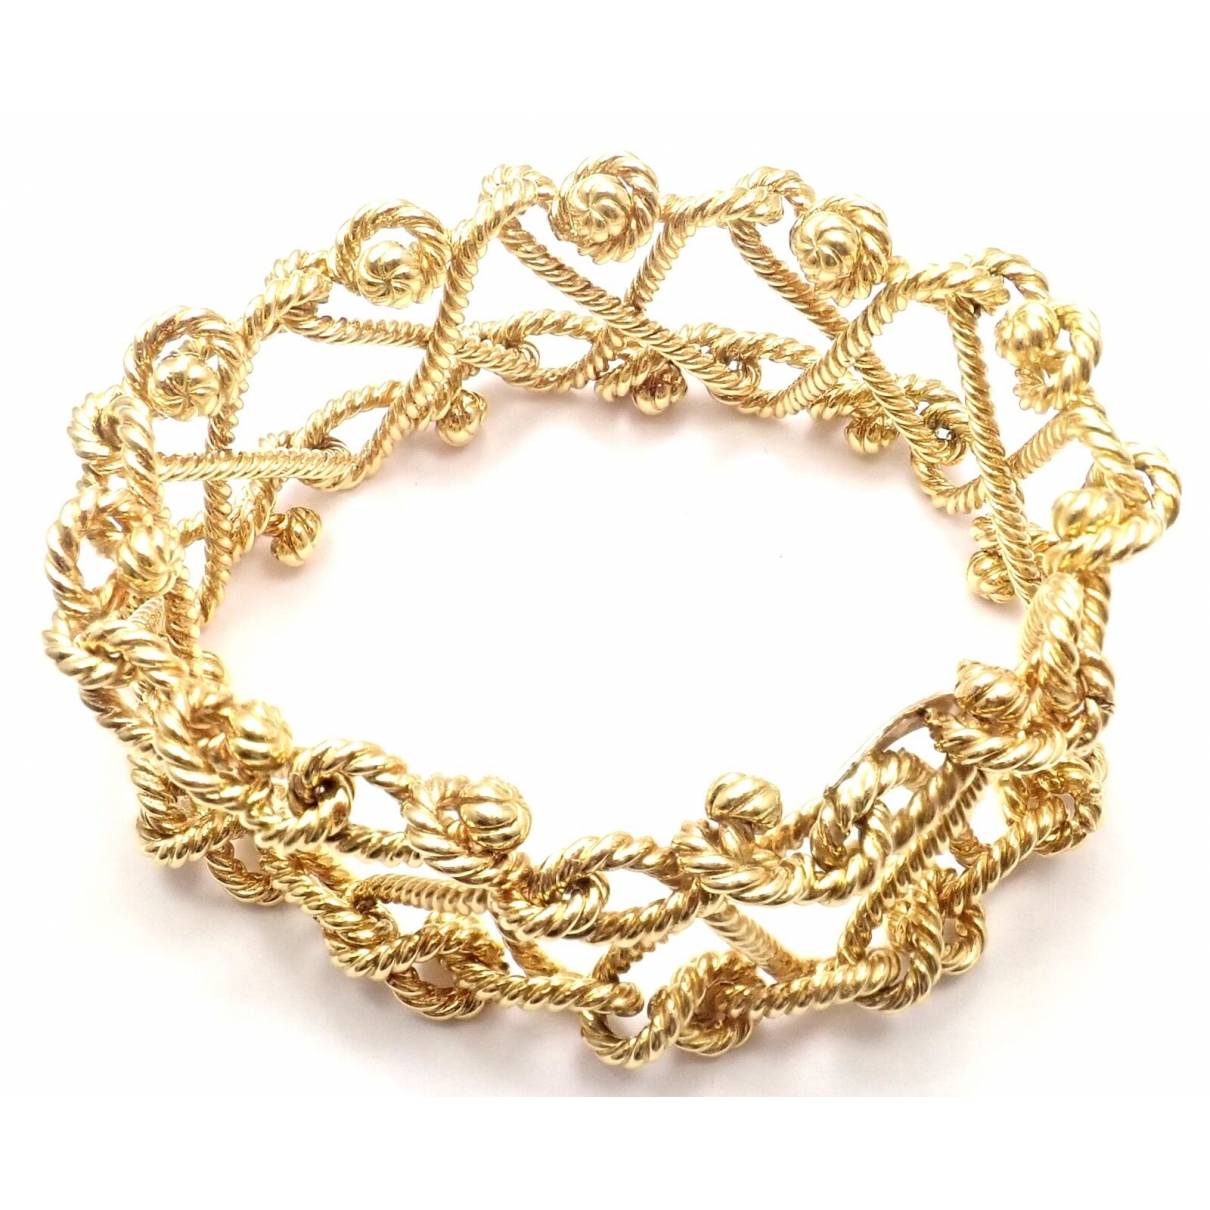 Buy VERDURA Yellow gold bracelet online